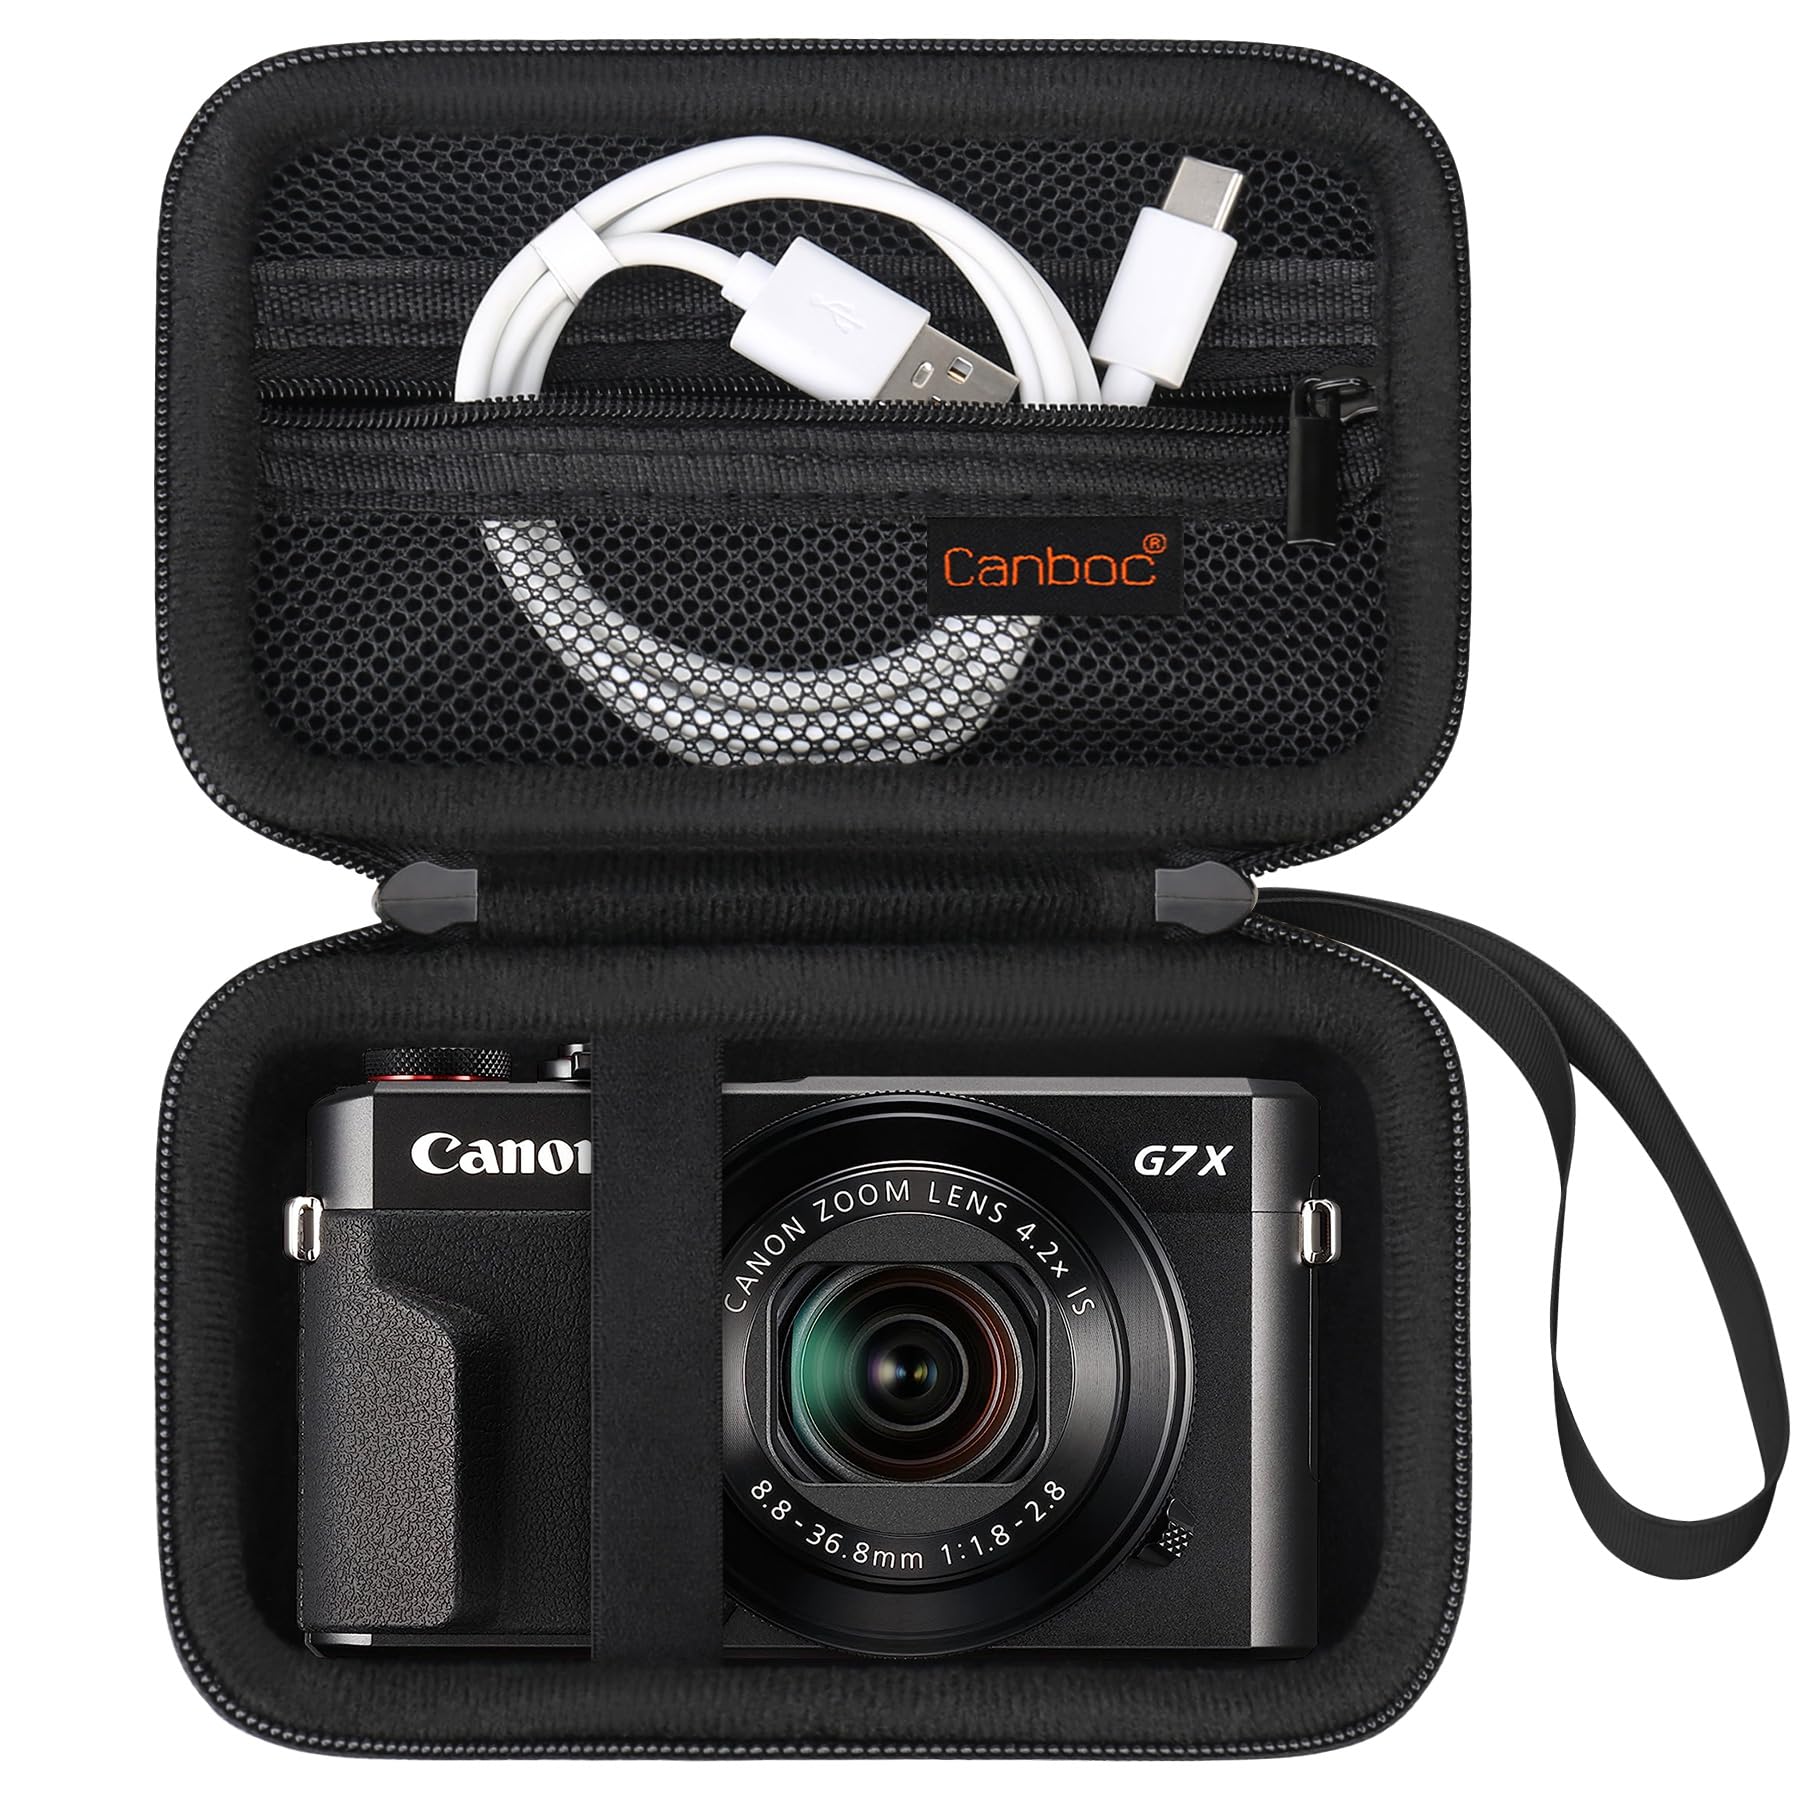 Canboc Camera Case for Canon PowerShot G7 X Mark II/ G7X Mark III Digital 4K Vlogging Camera, Point and Shoot 4K Video Camera Bag, Zipper Mesh Pocket fits USB Cable, Batteries, Black